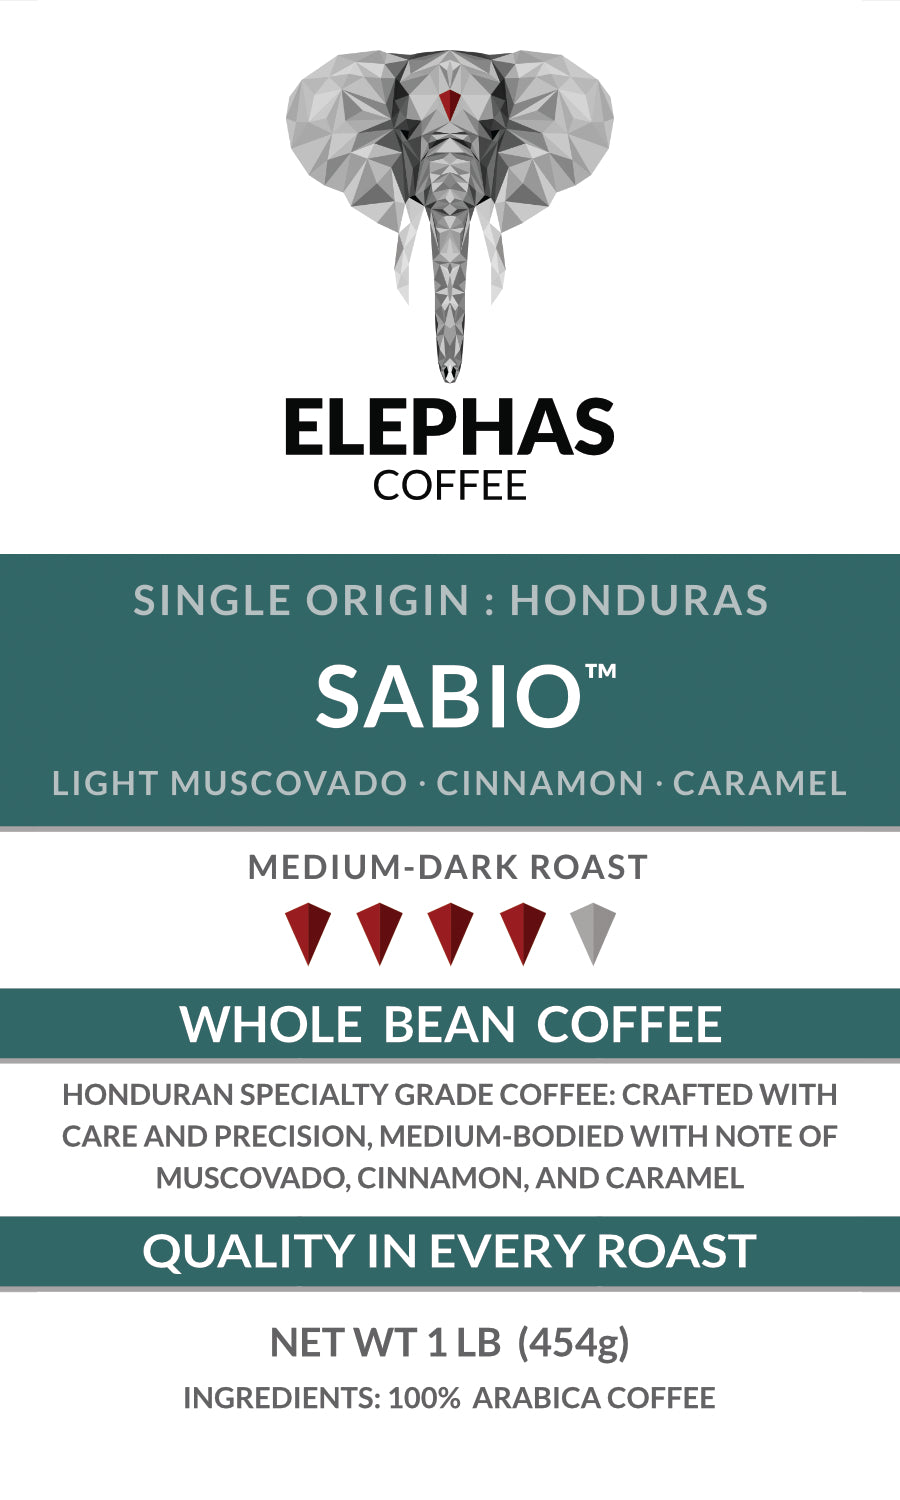 SABIO Honduras Single Origin Coffee - Elephas Coffee